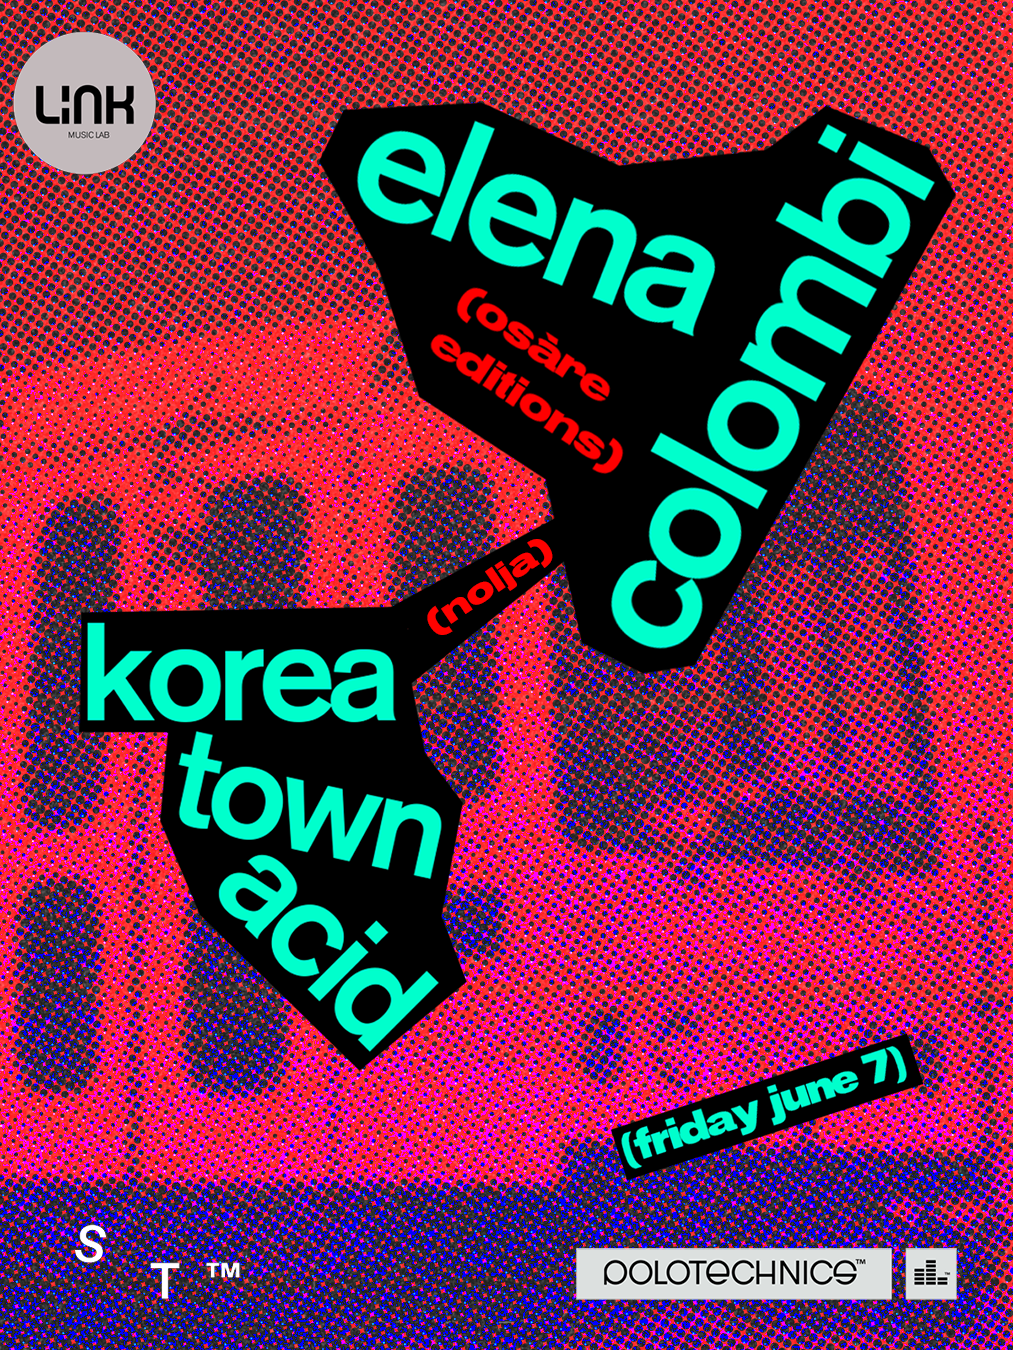 131: Polotechnics featuring Elena Colombi and Korea Town Acid - フライヤー表